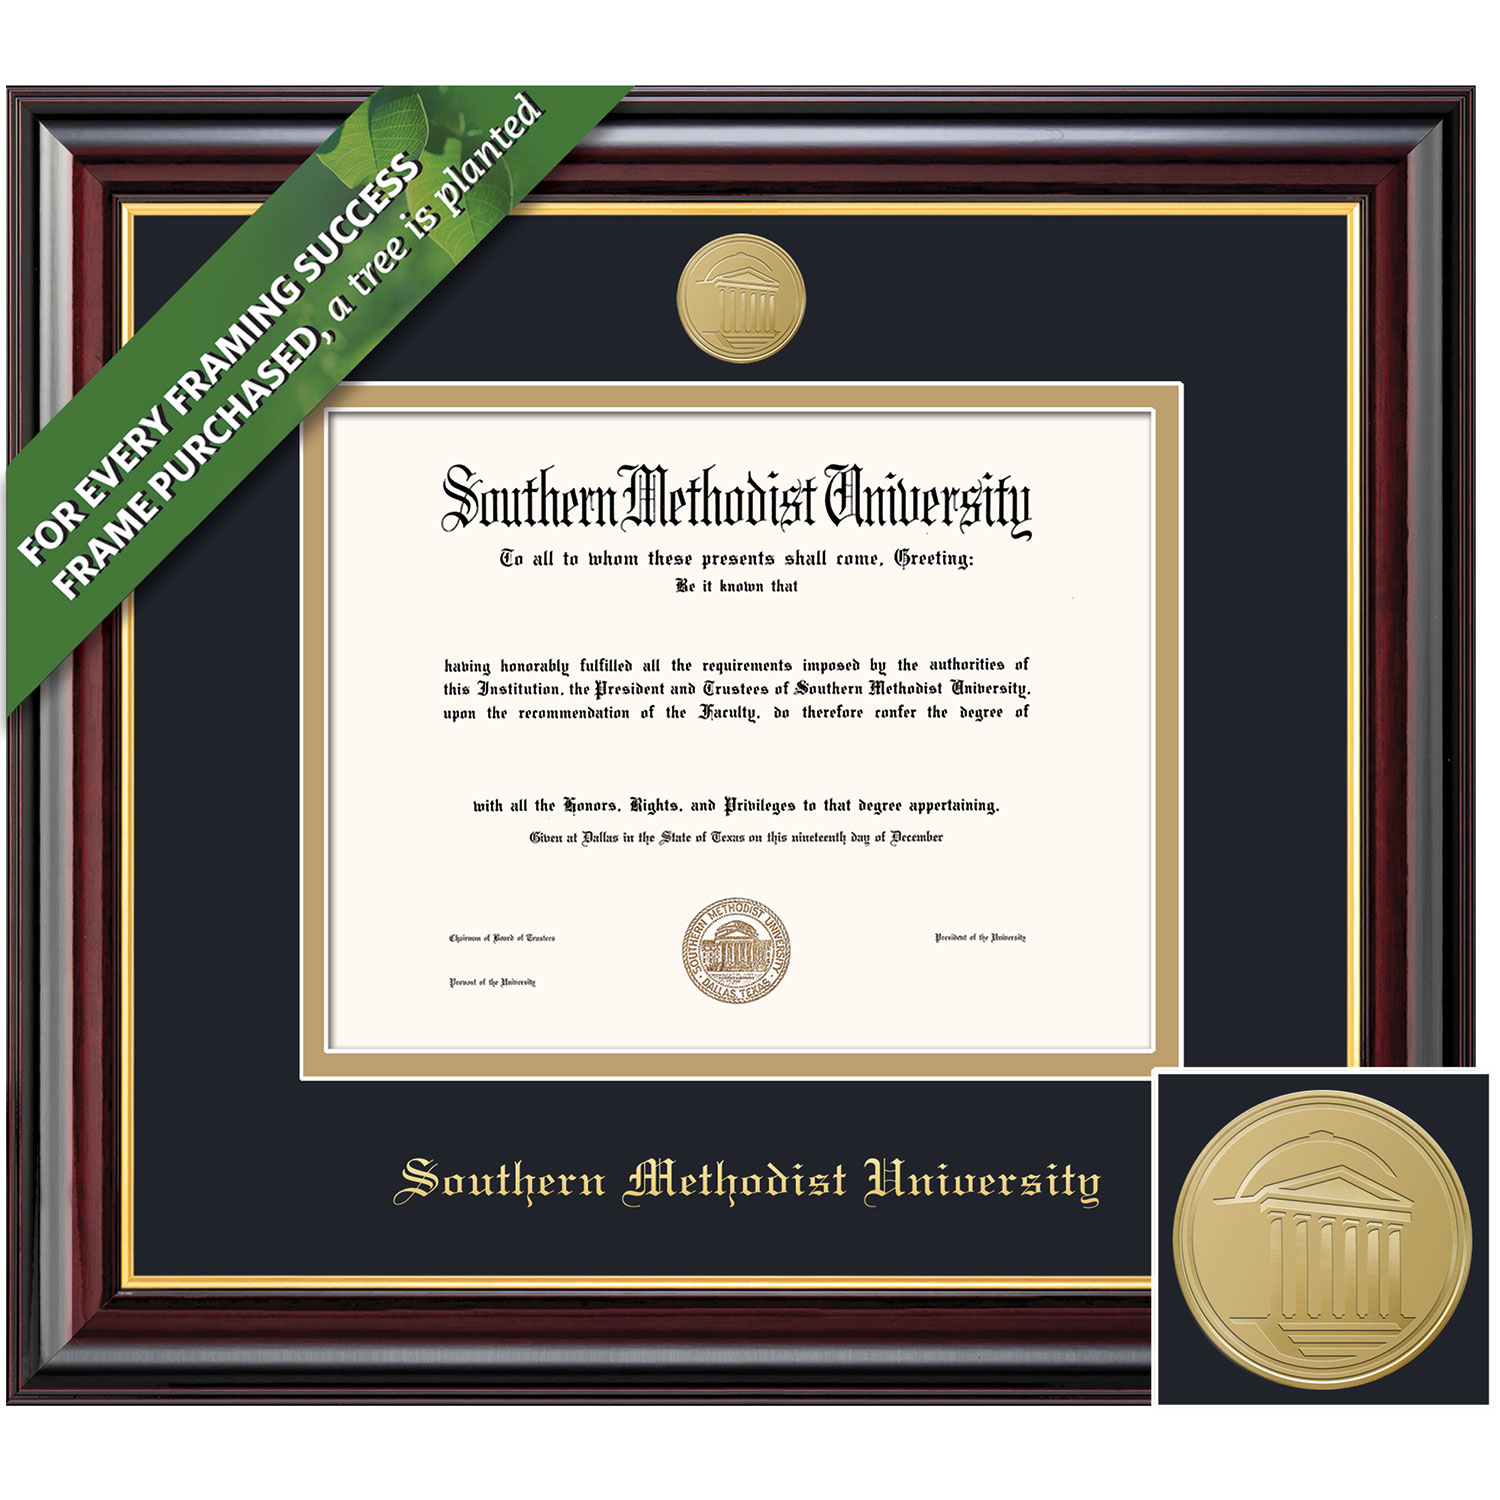 Framing Success 11 x 14 Windsor Gold Medallion Masters, PhD Diploma Frame